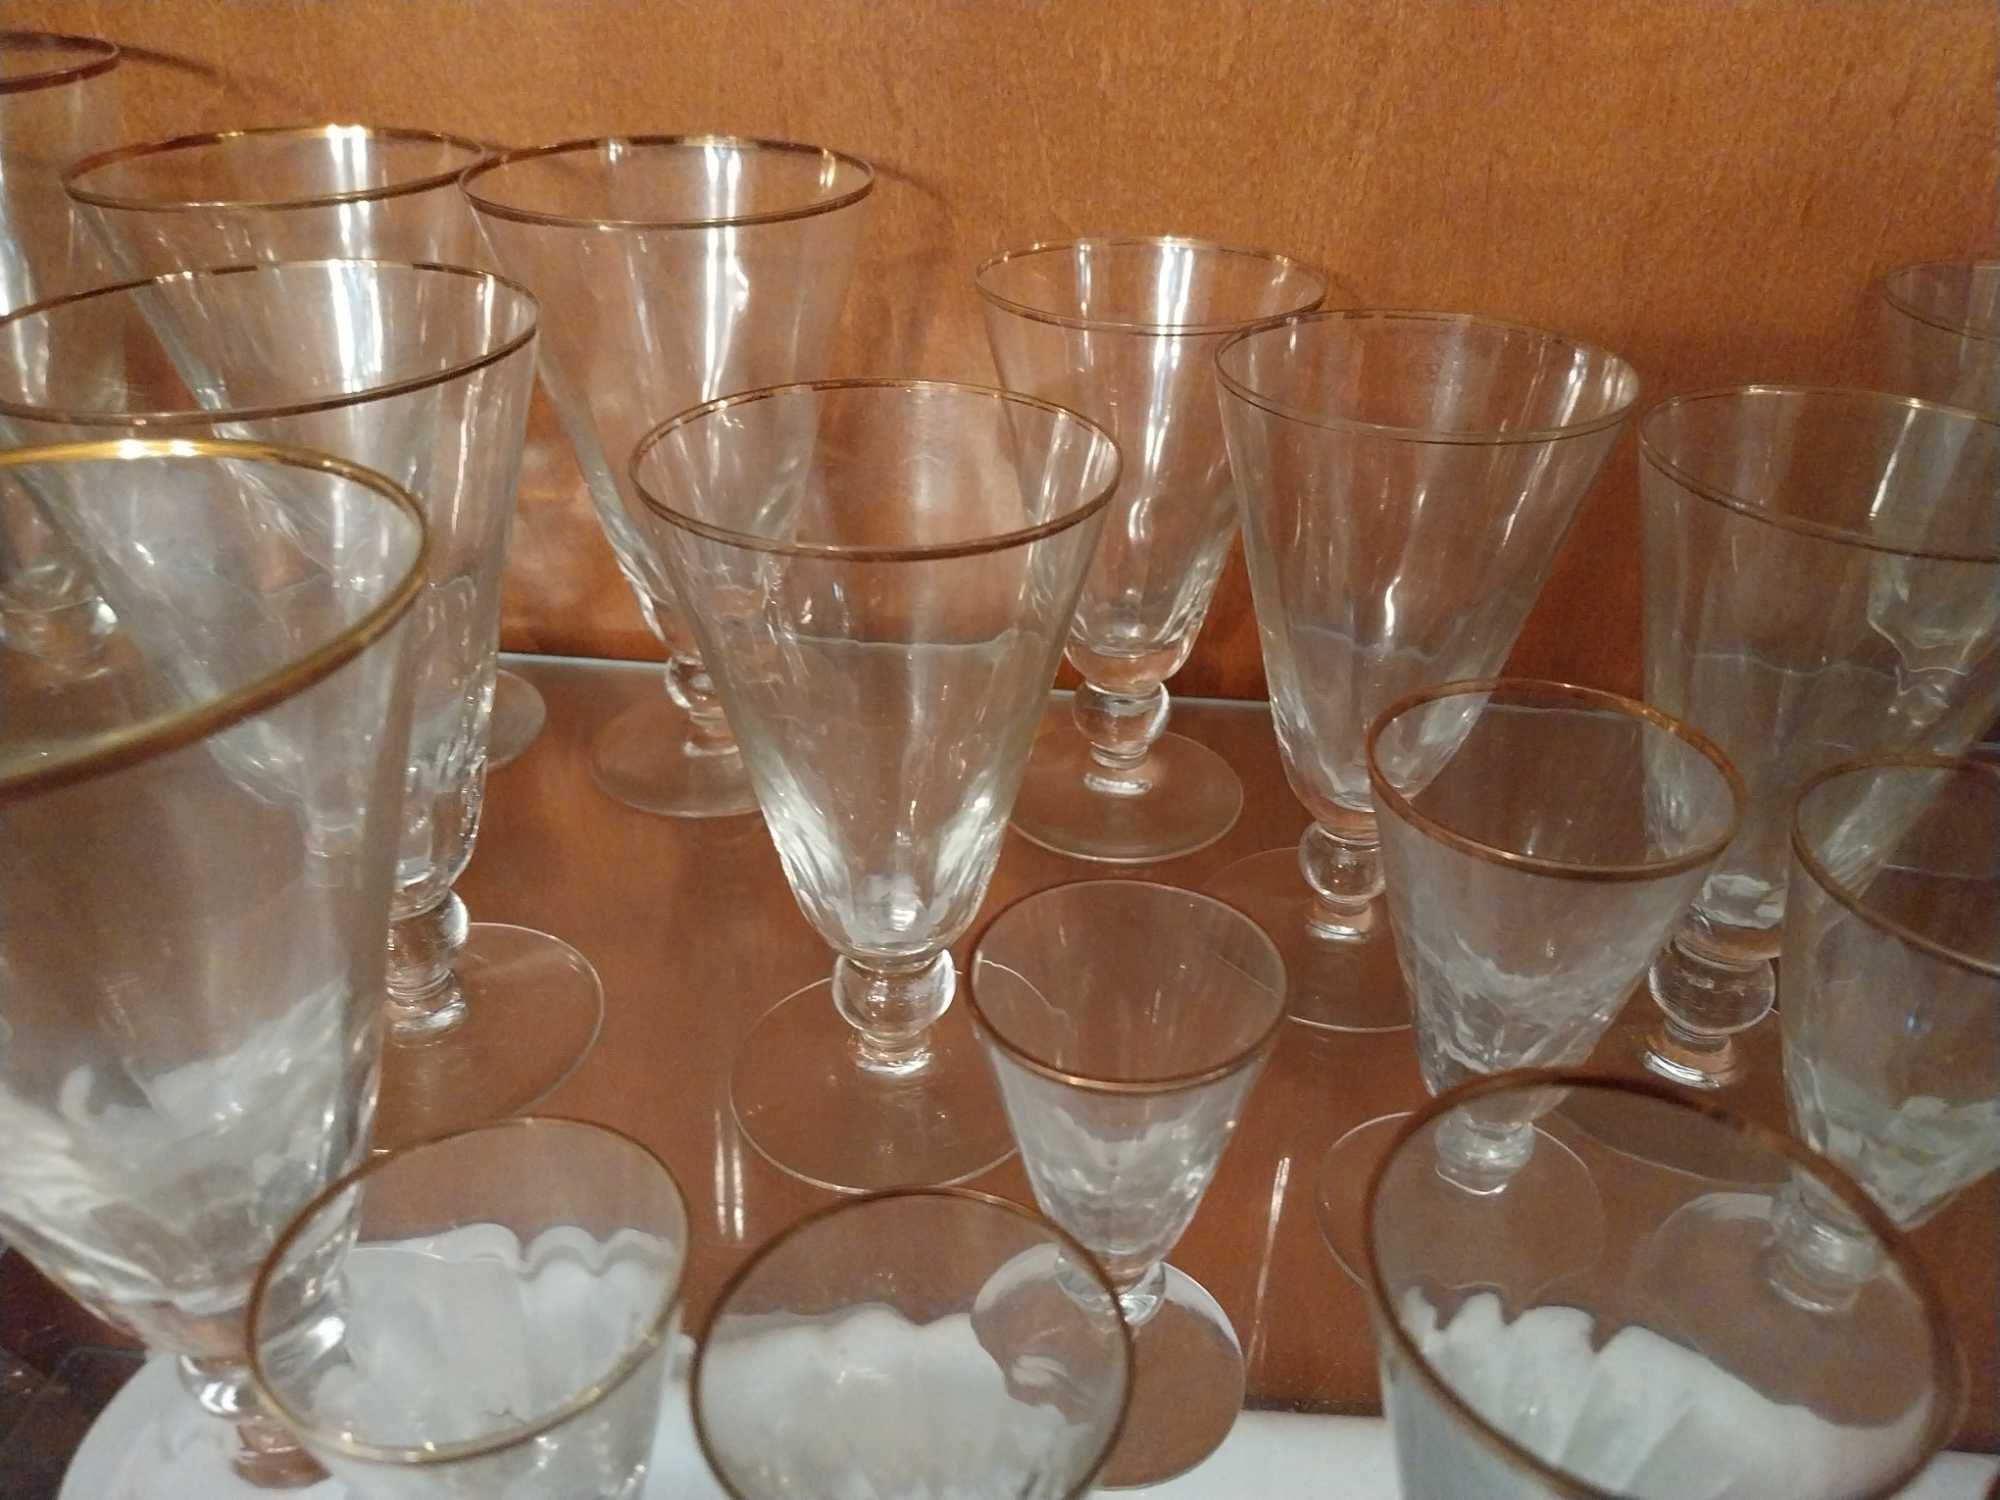 Serviço de copos vintage